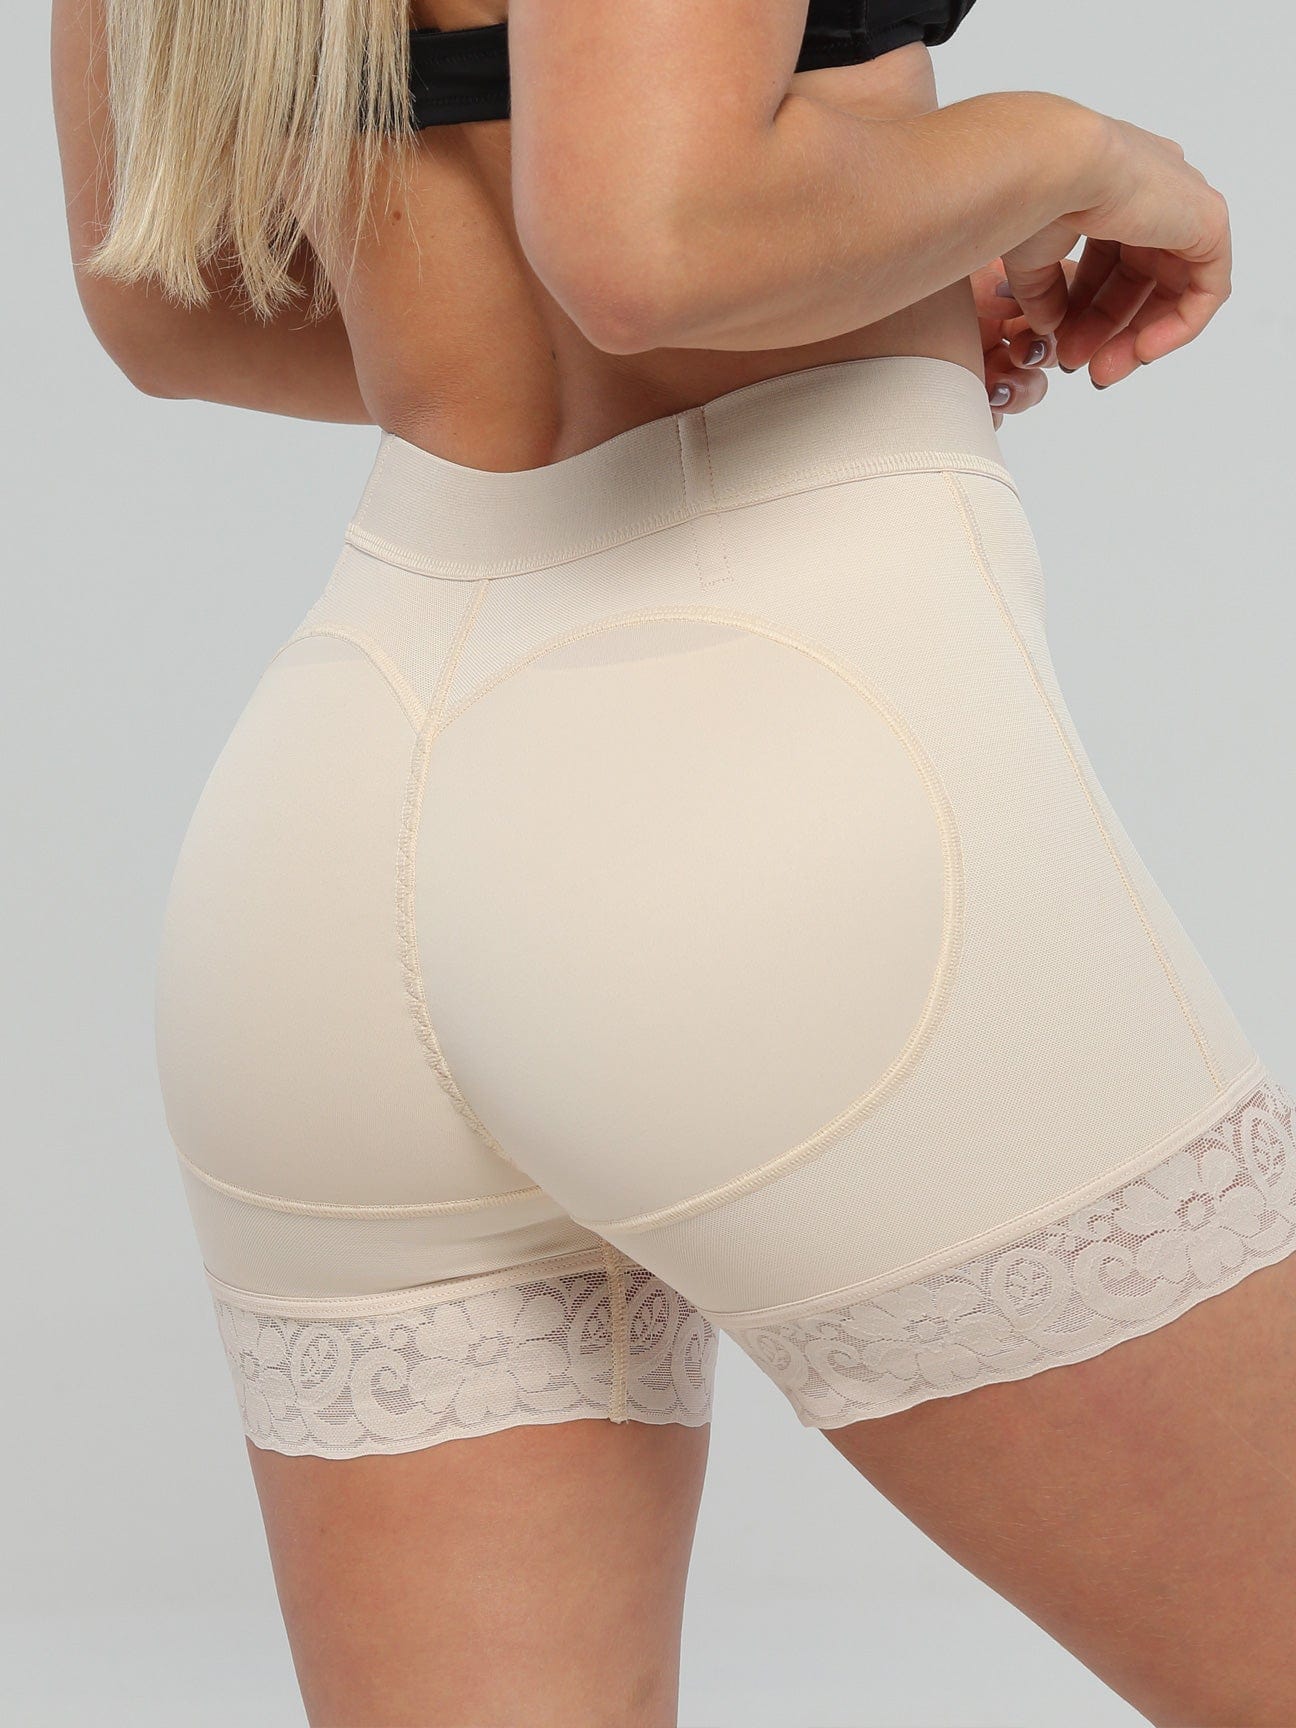 Melibelt Preformed Butt Lifting Shorts W/ Silicon #5030 – GRAY FASHION